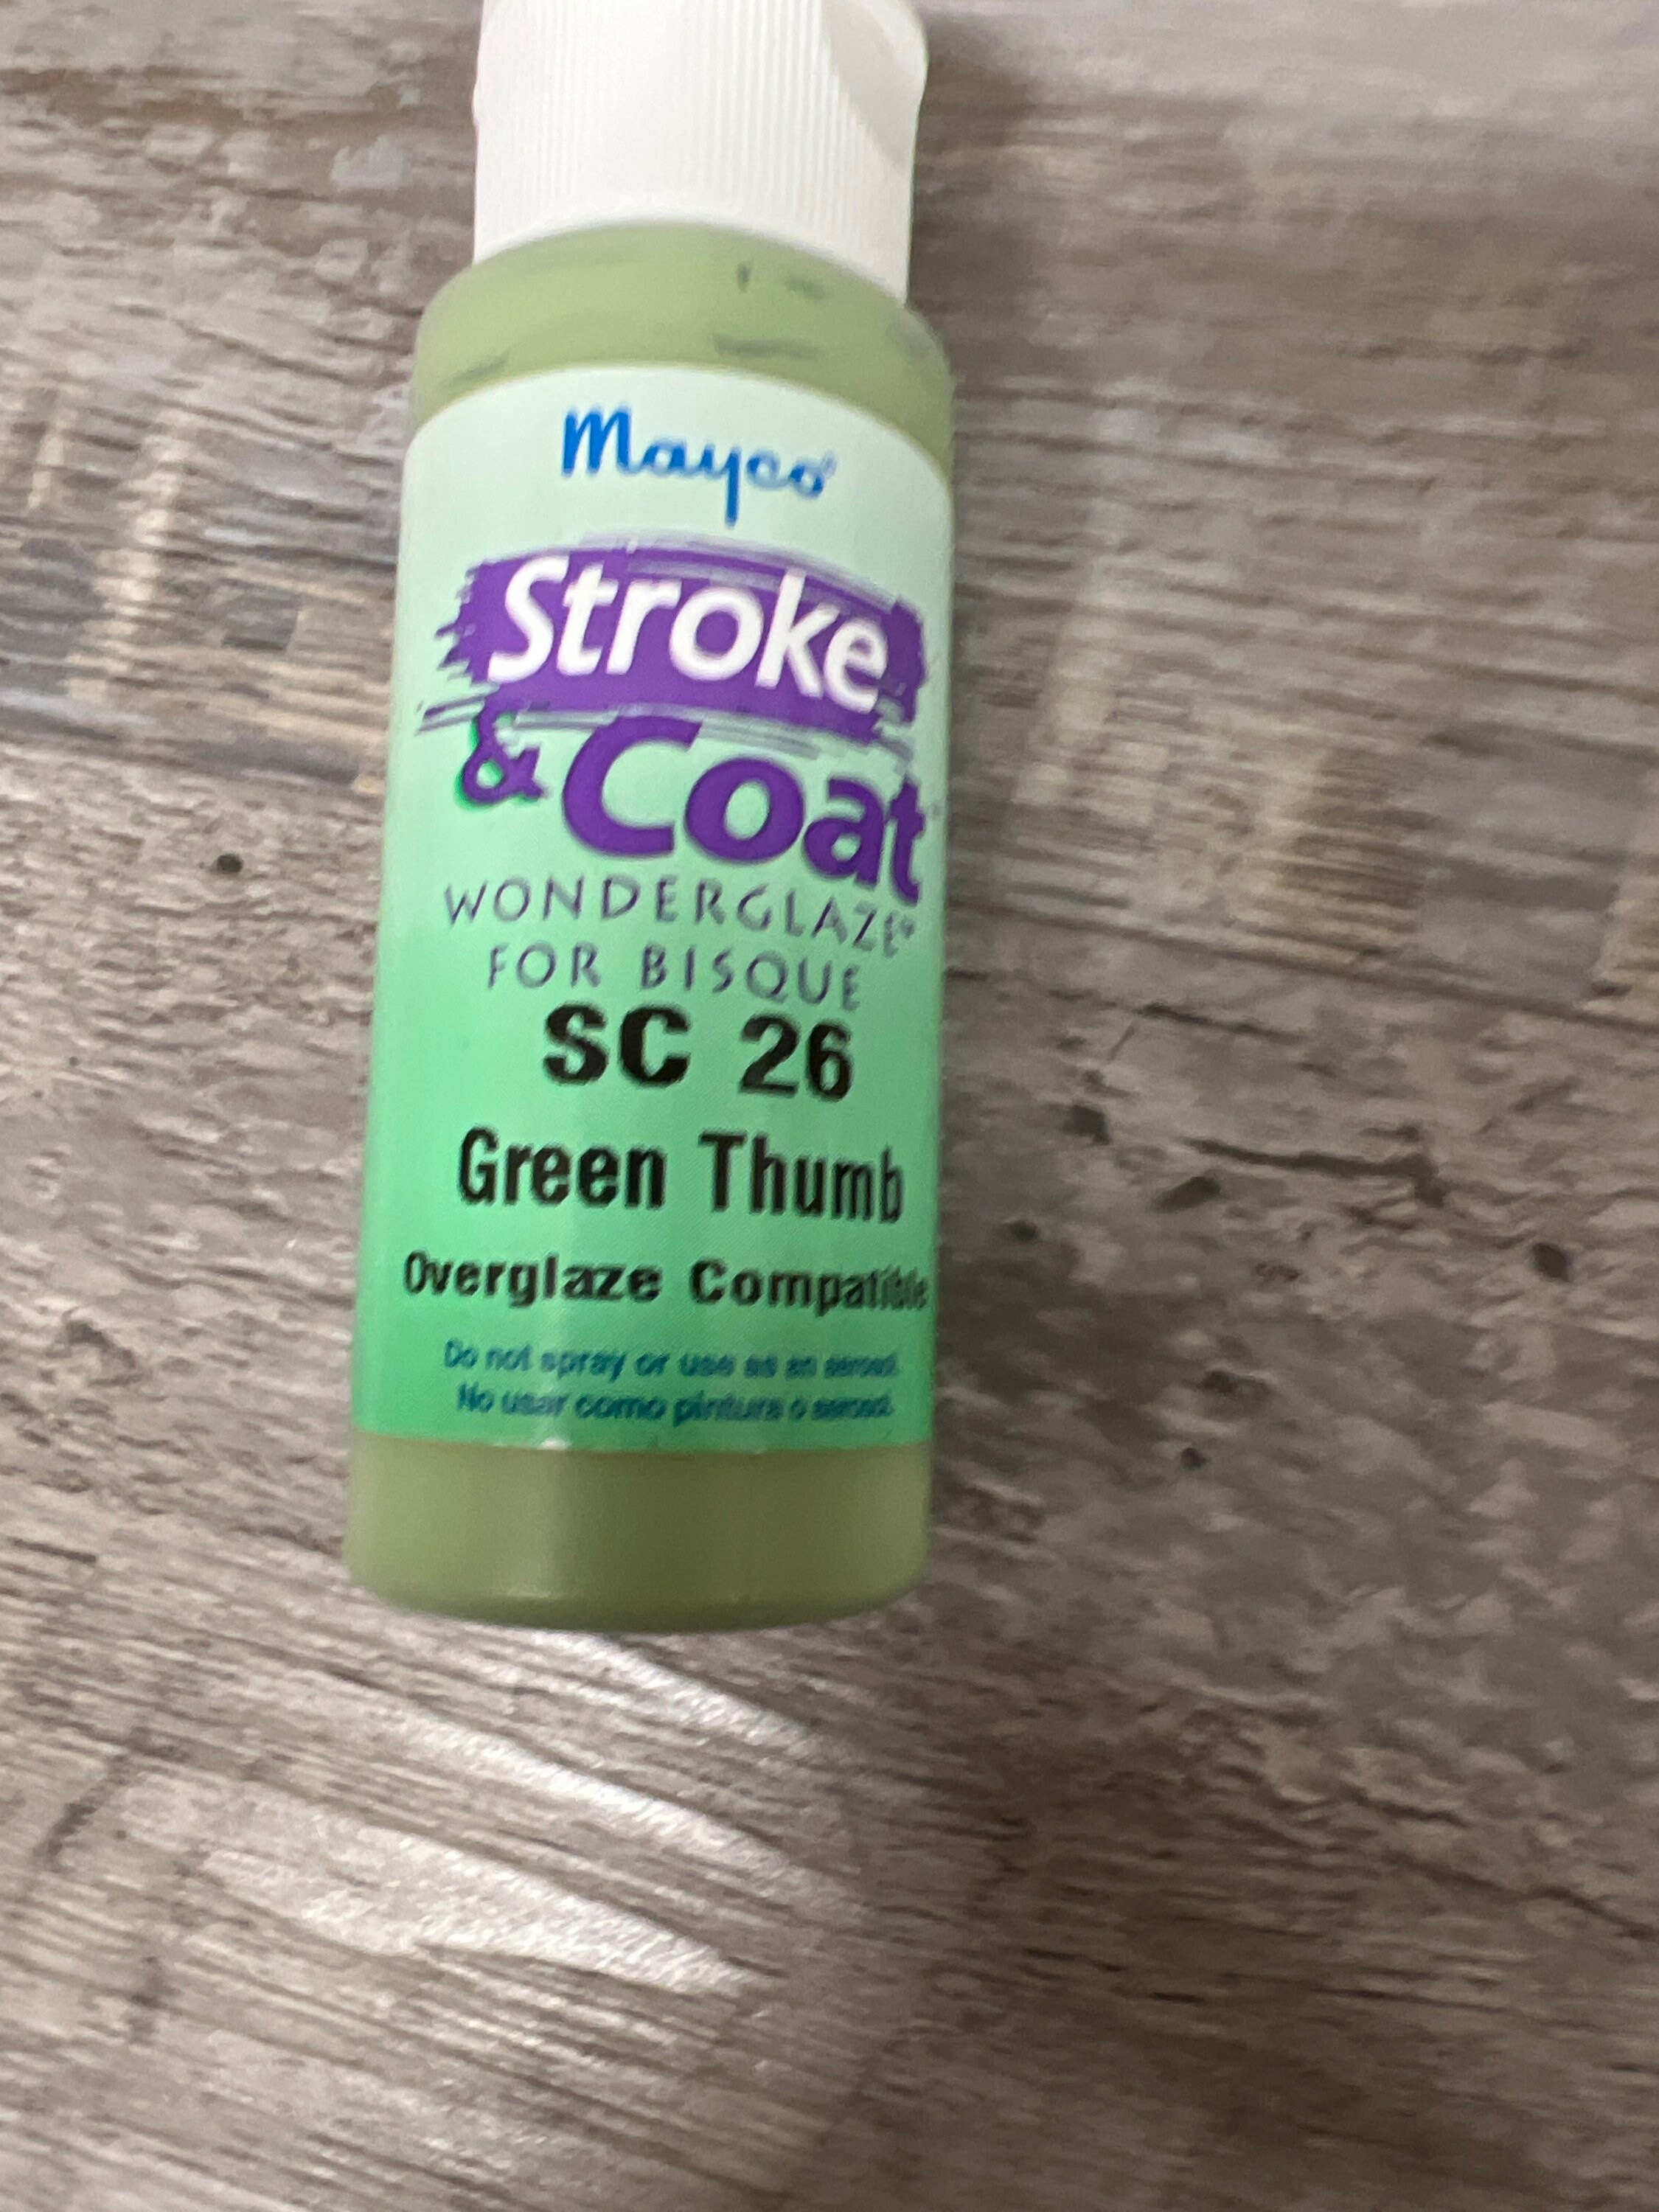 Mayco Stroke & Coat Wonderglaze Kit - Bottle, 2 oz, Wonderglaze Kit 1